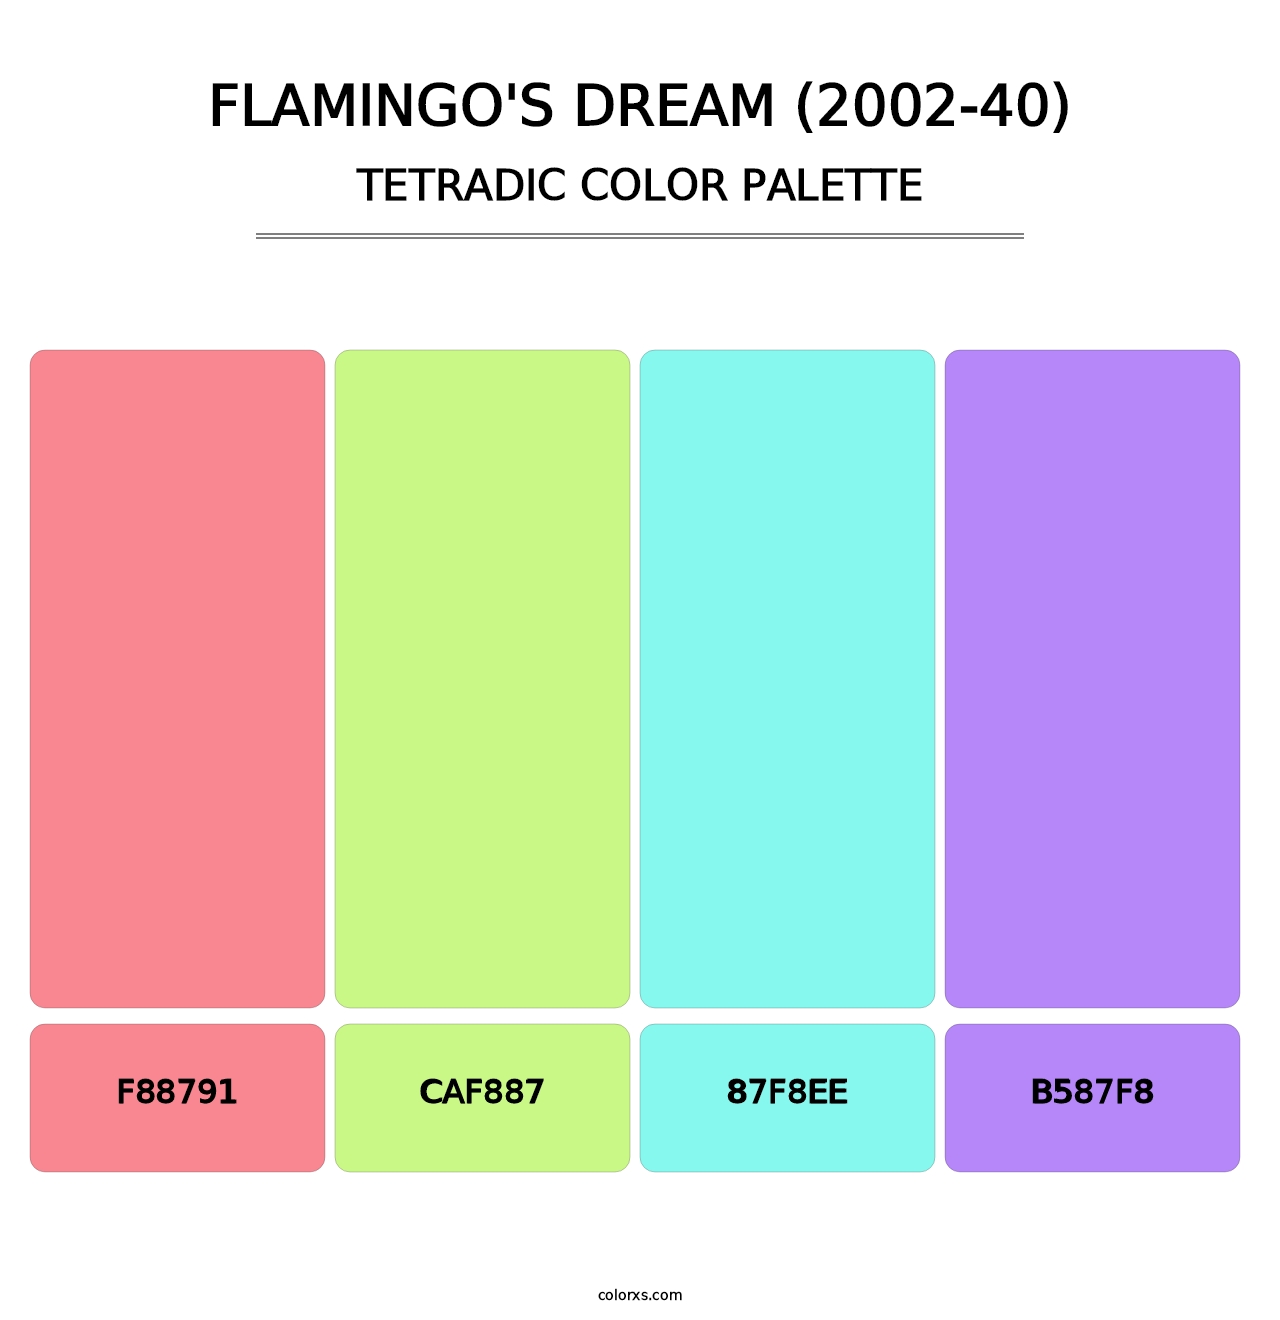 Flamingo's Dream (2002-40) - Tetradic Color Palette